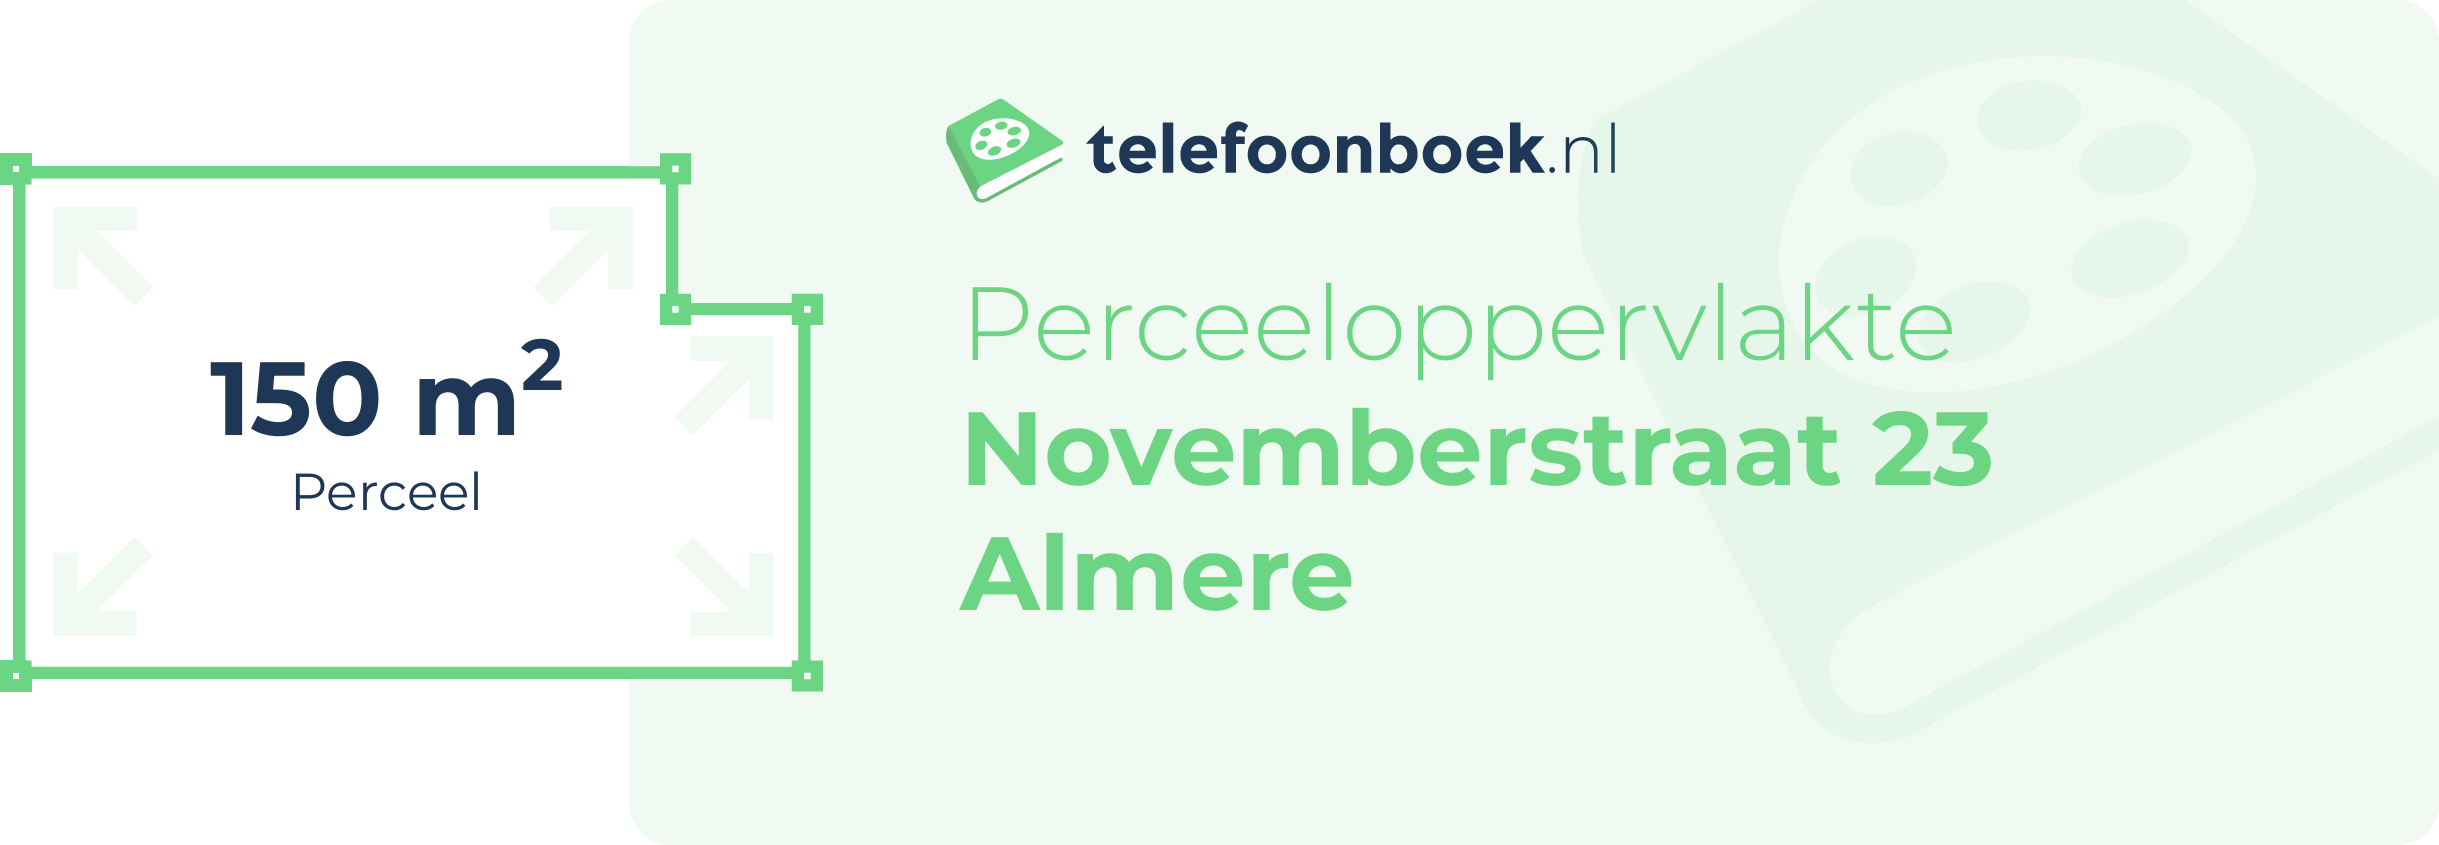 Perceeloppervlakte Novemberstraat 23 Almere